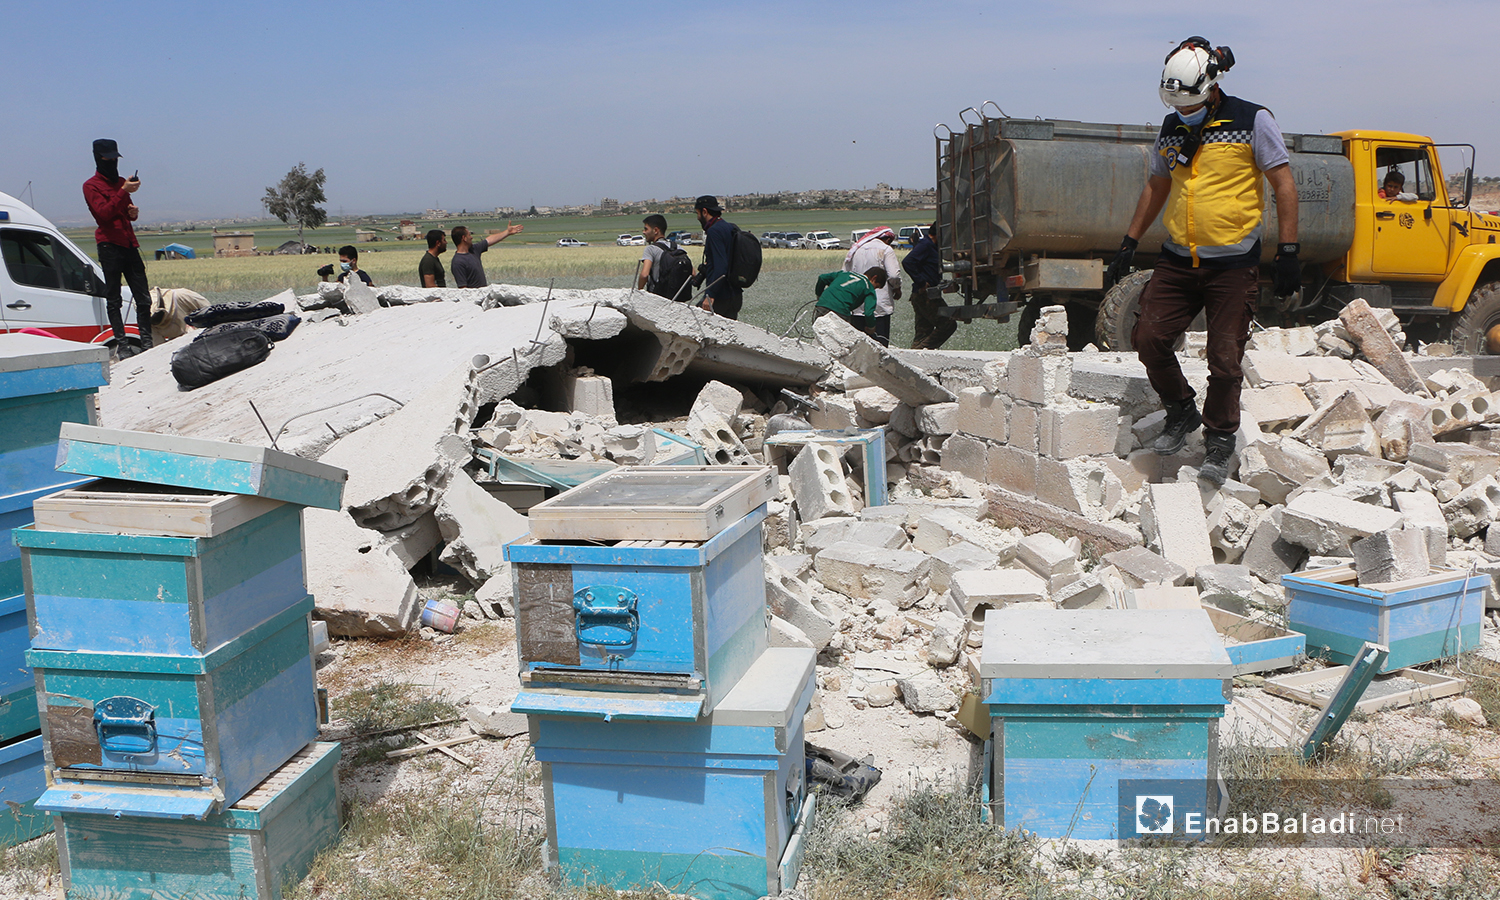 A civil defense volunteer checking the explosion site - 03 May 2021 (Anas al-Khouli / Enab Baladi)
